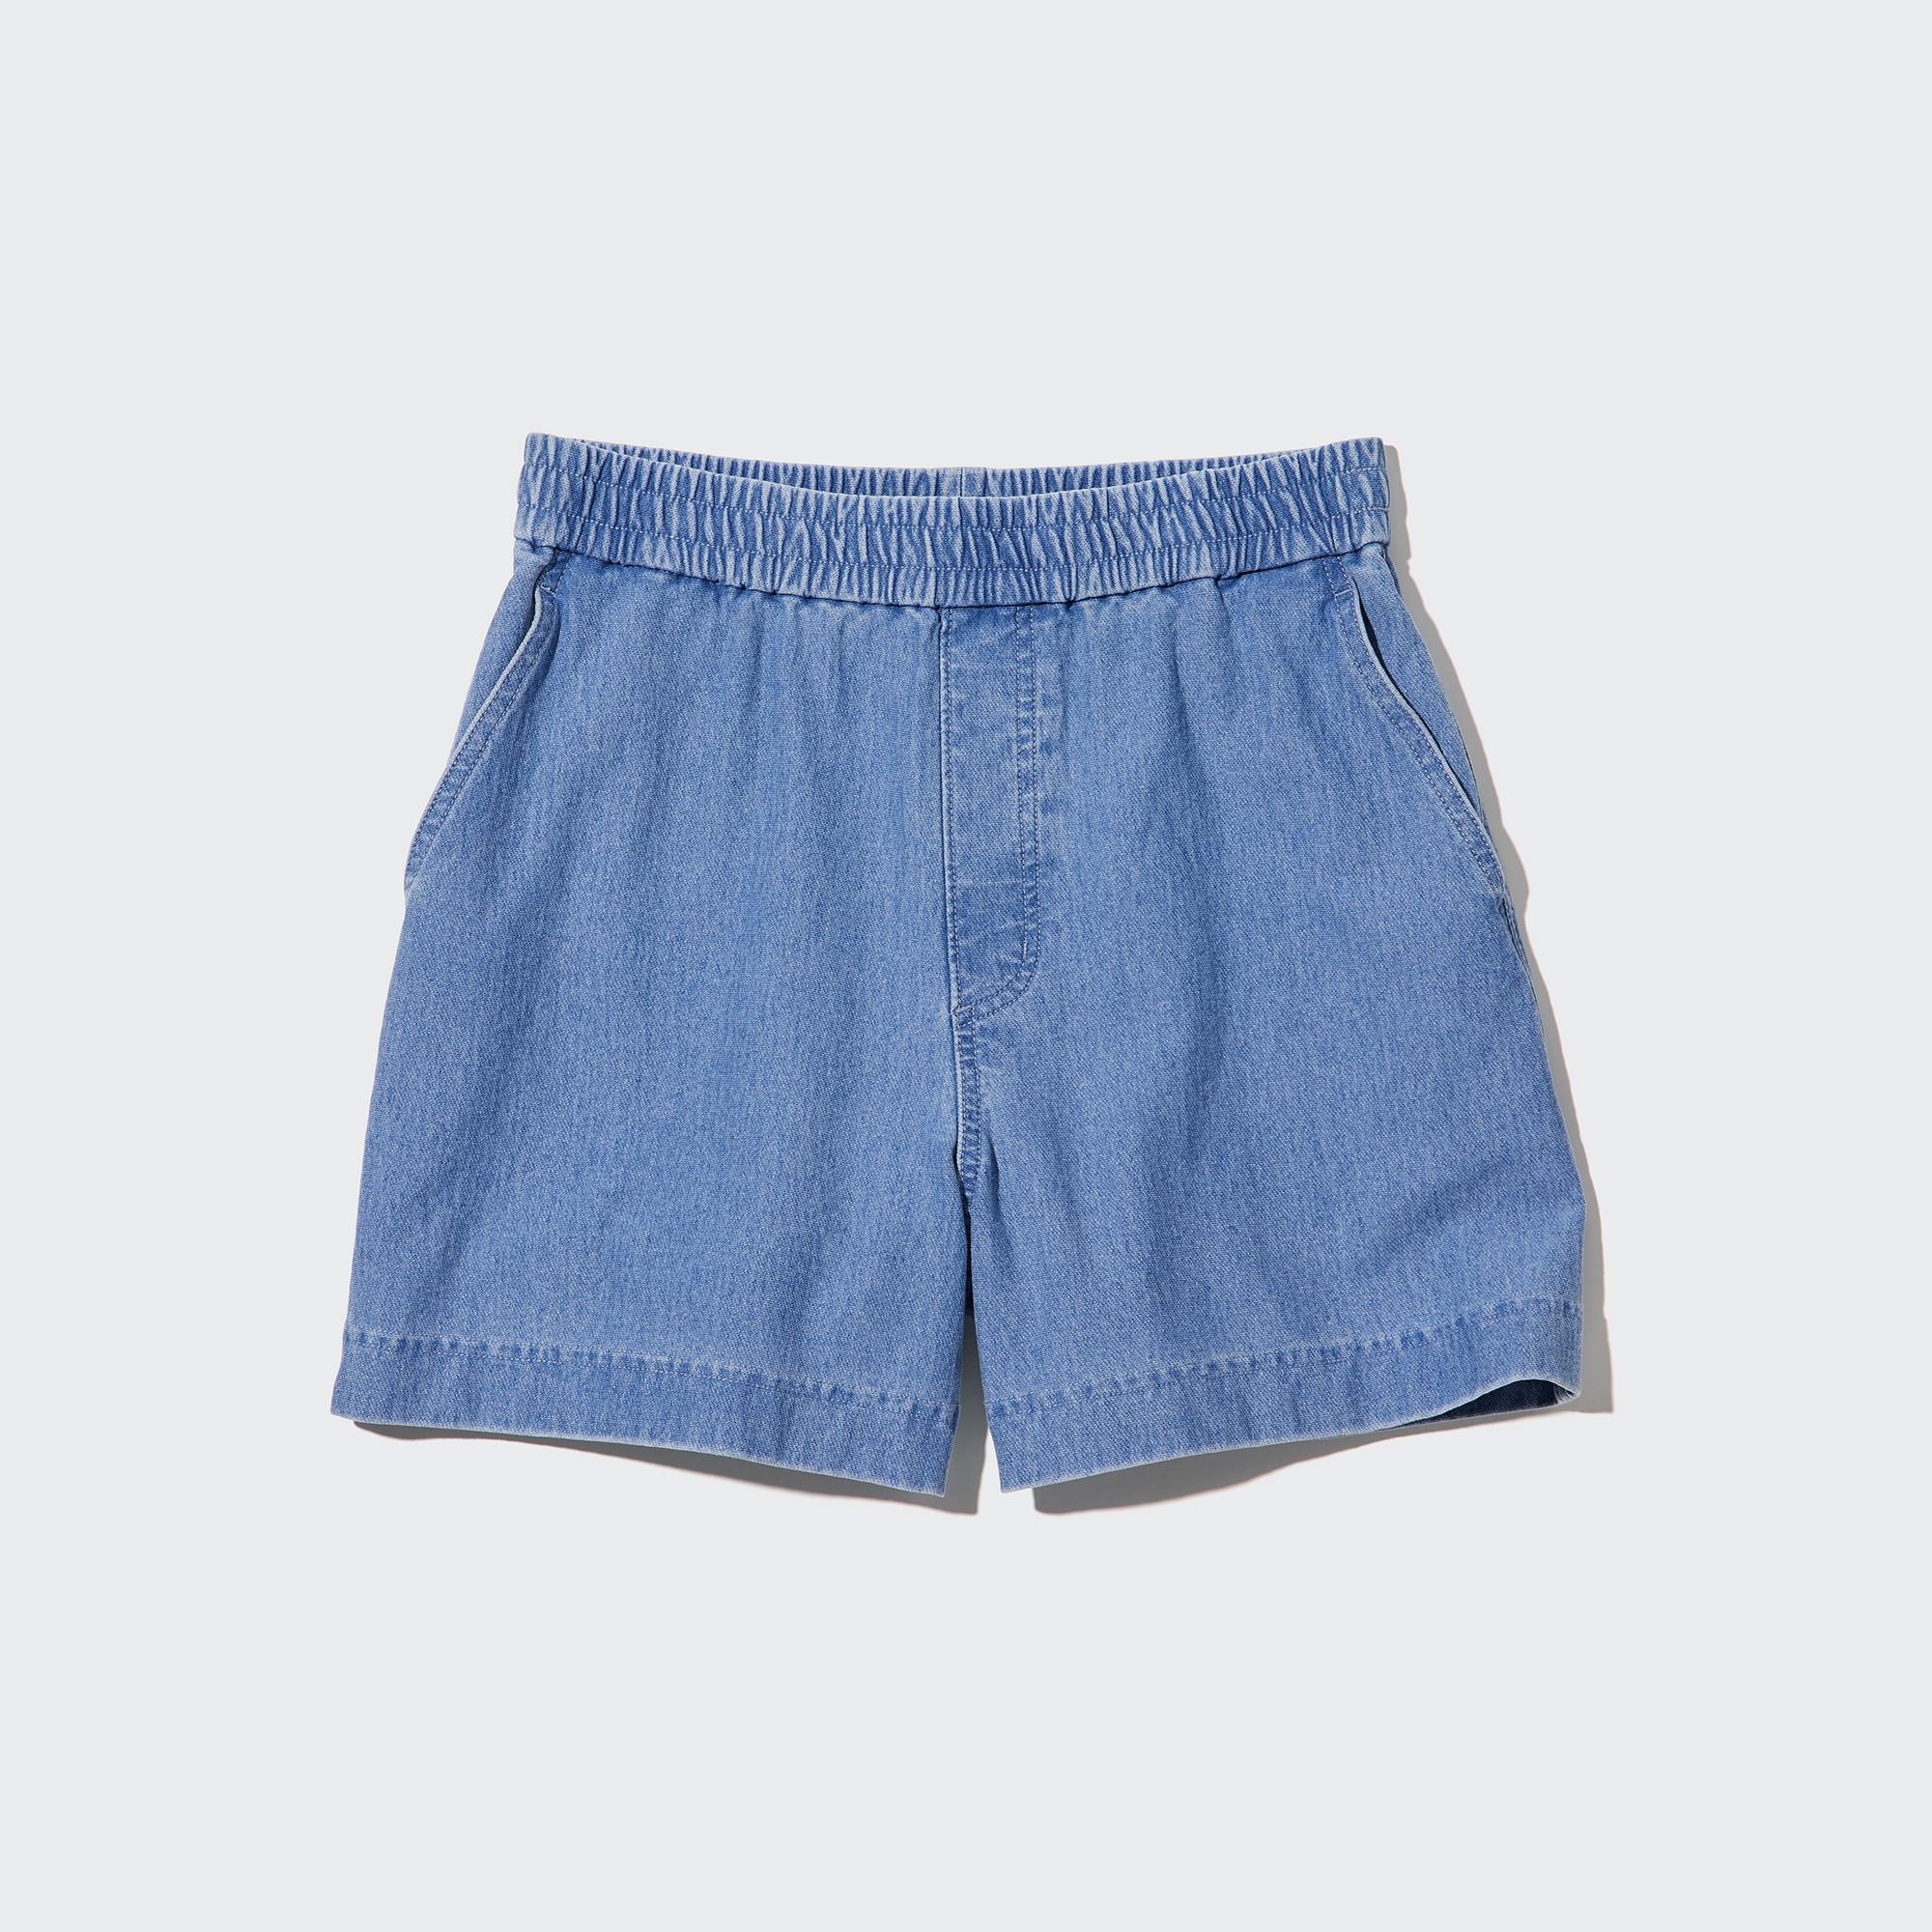 2-pack denim shorts - Denim blue/Light denim blue - Kids | H&M IN